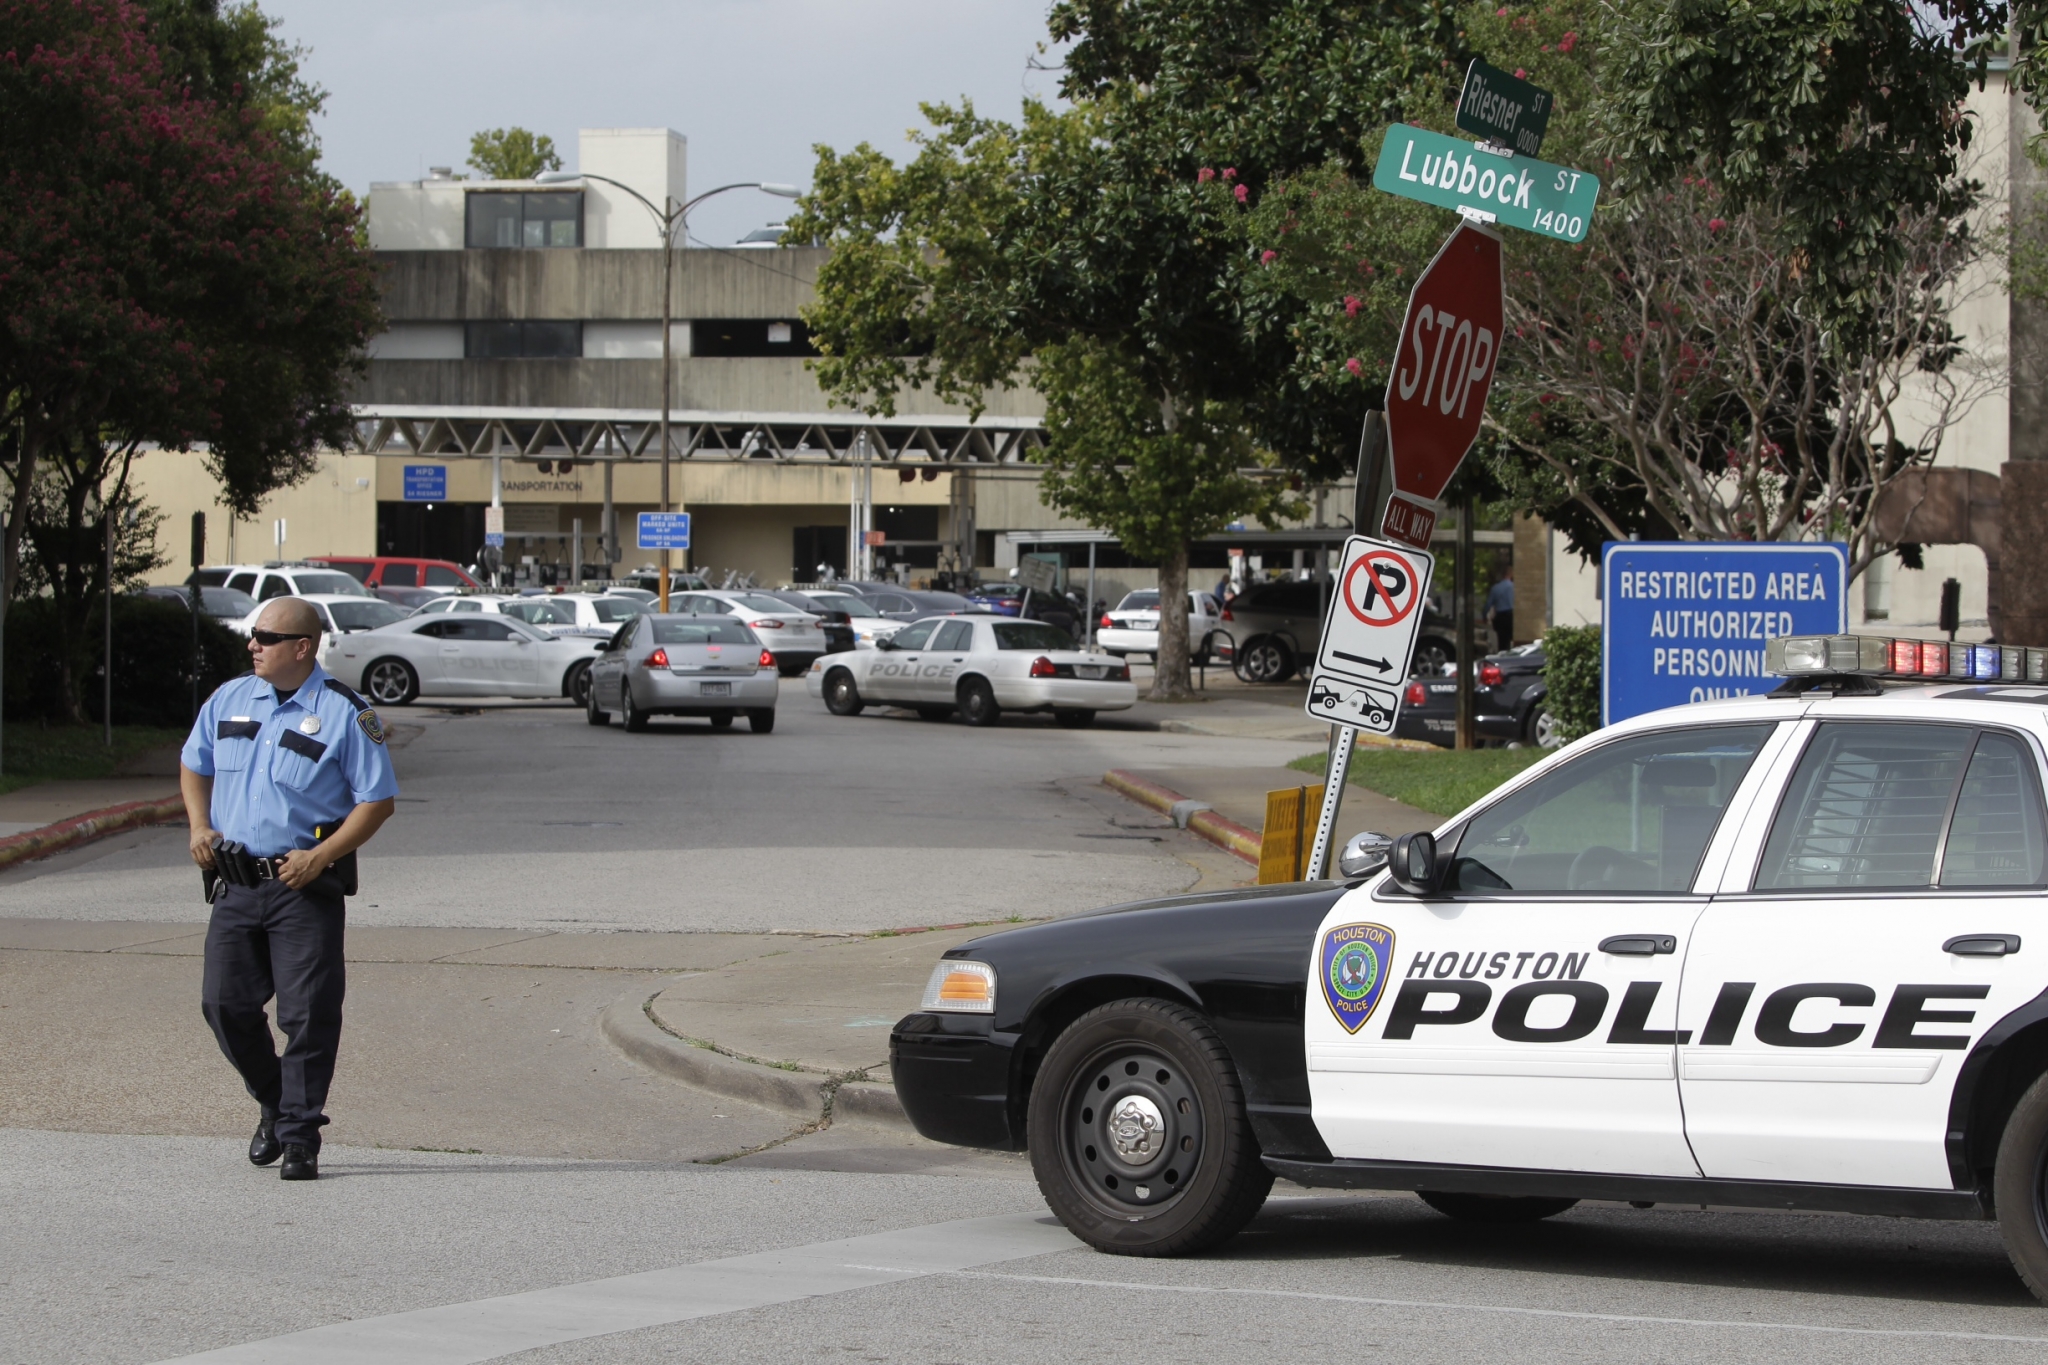 Houston Police officer killed in shooting - San Antonio Express-News2048 x 1365